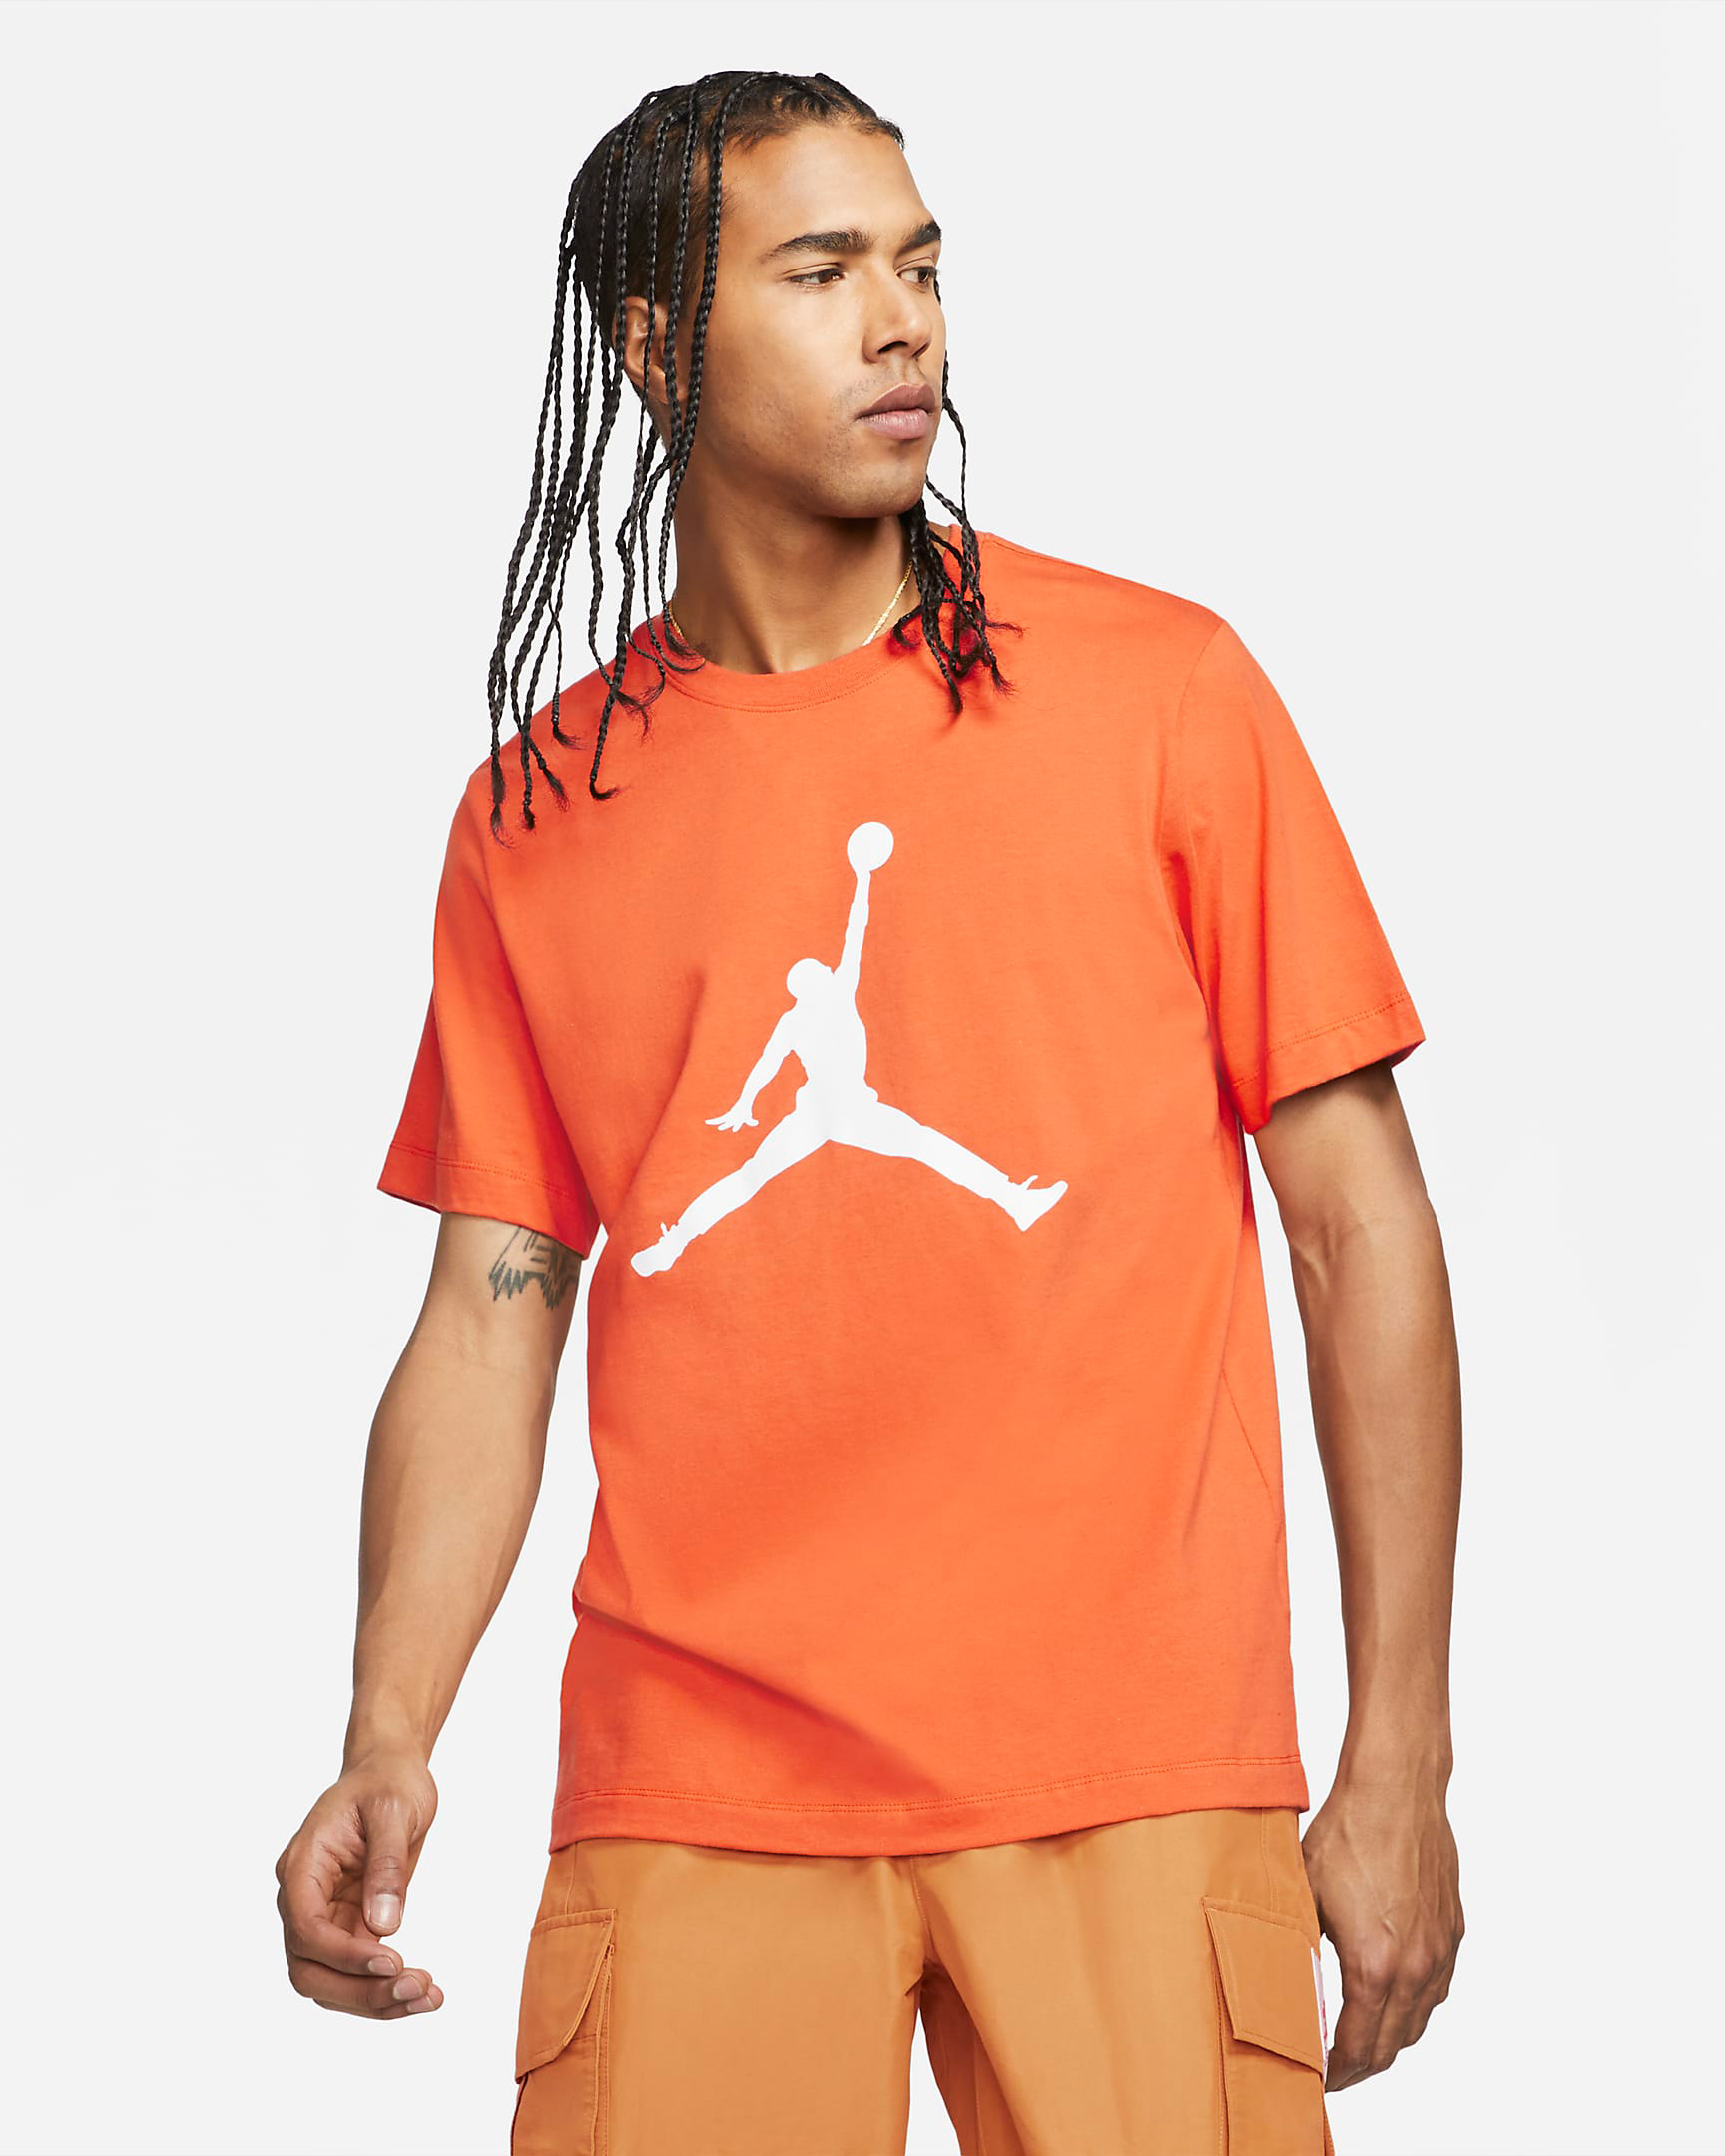 jordan-11-low-bright-citrus-shirt-3